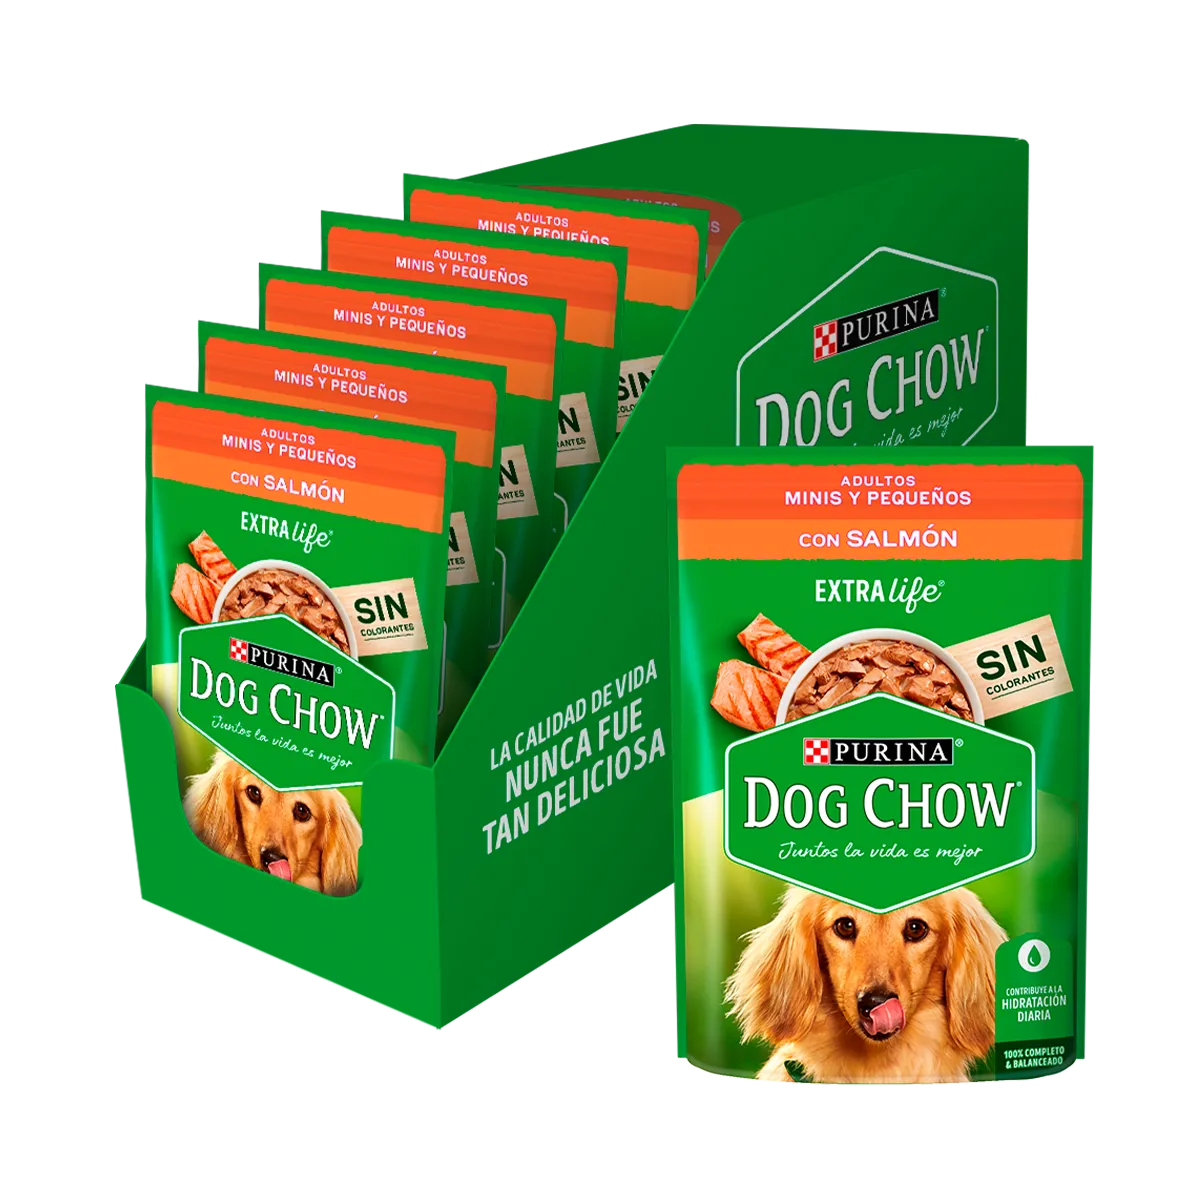 dog-chow-adultos-mini-pequeños-salmon-product